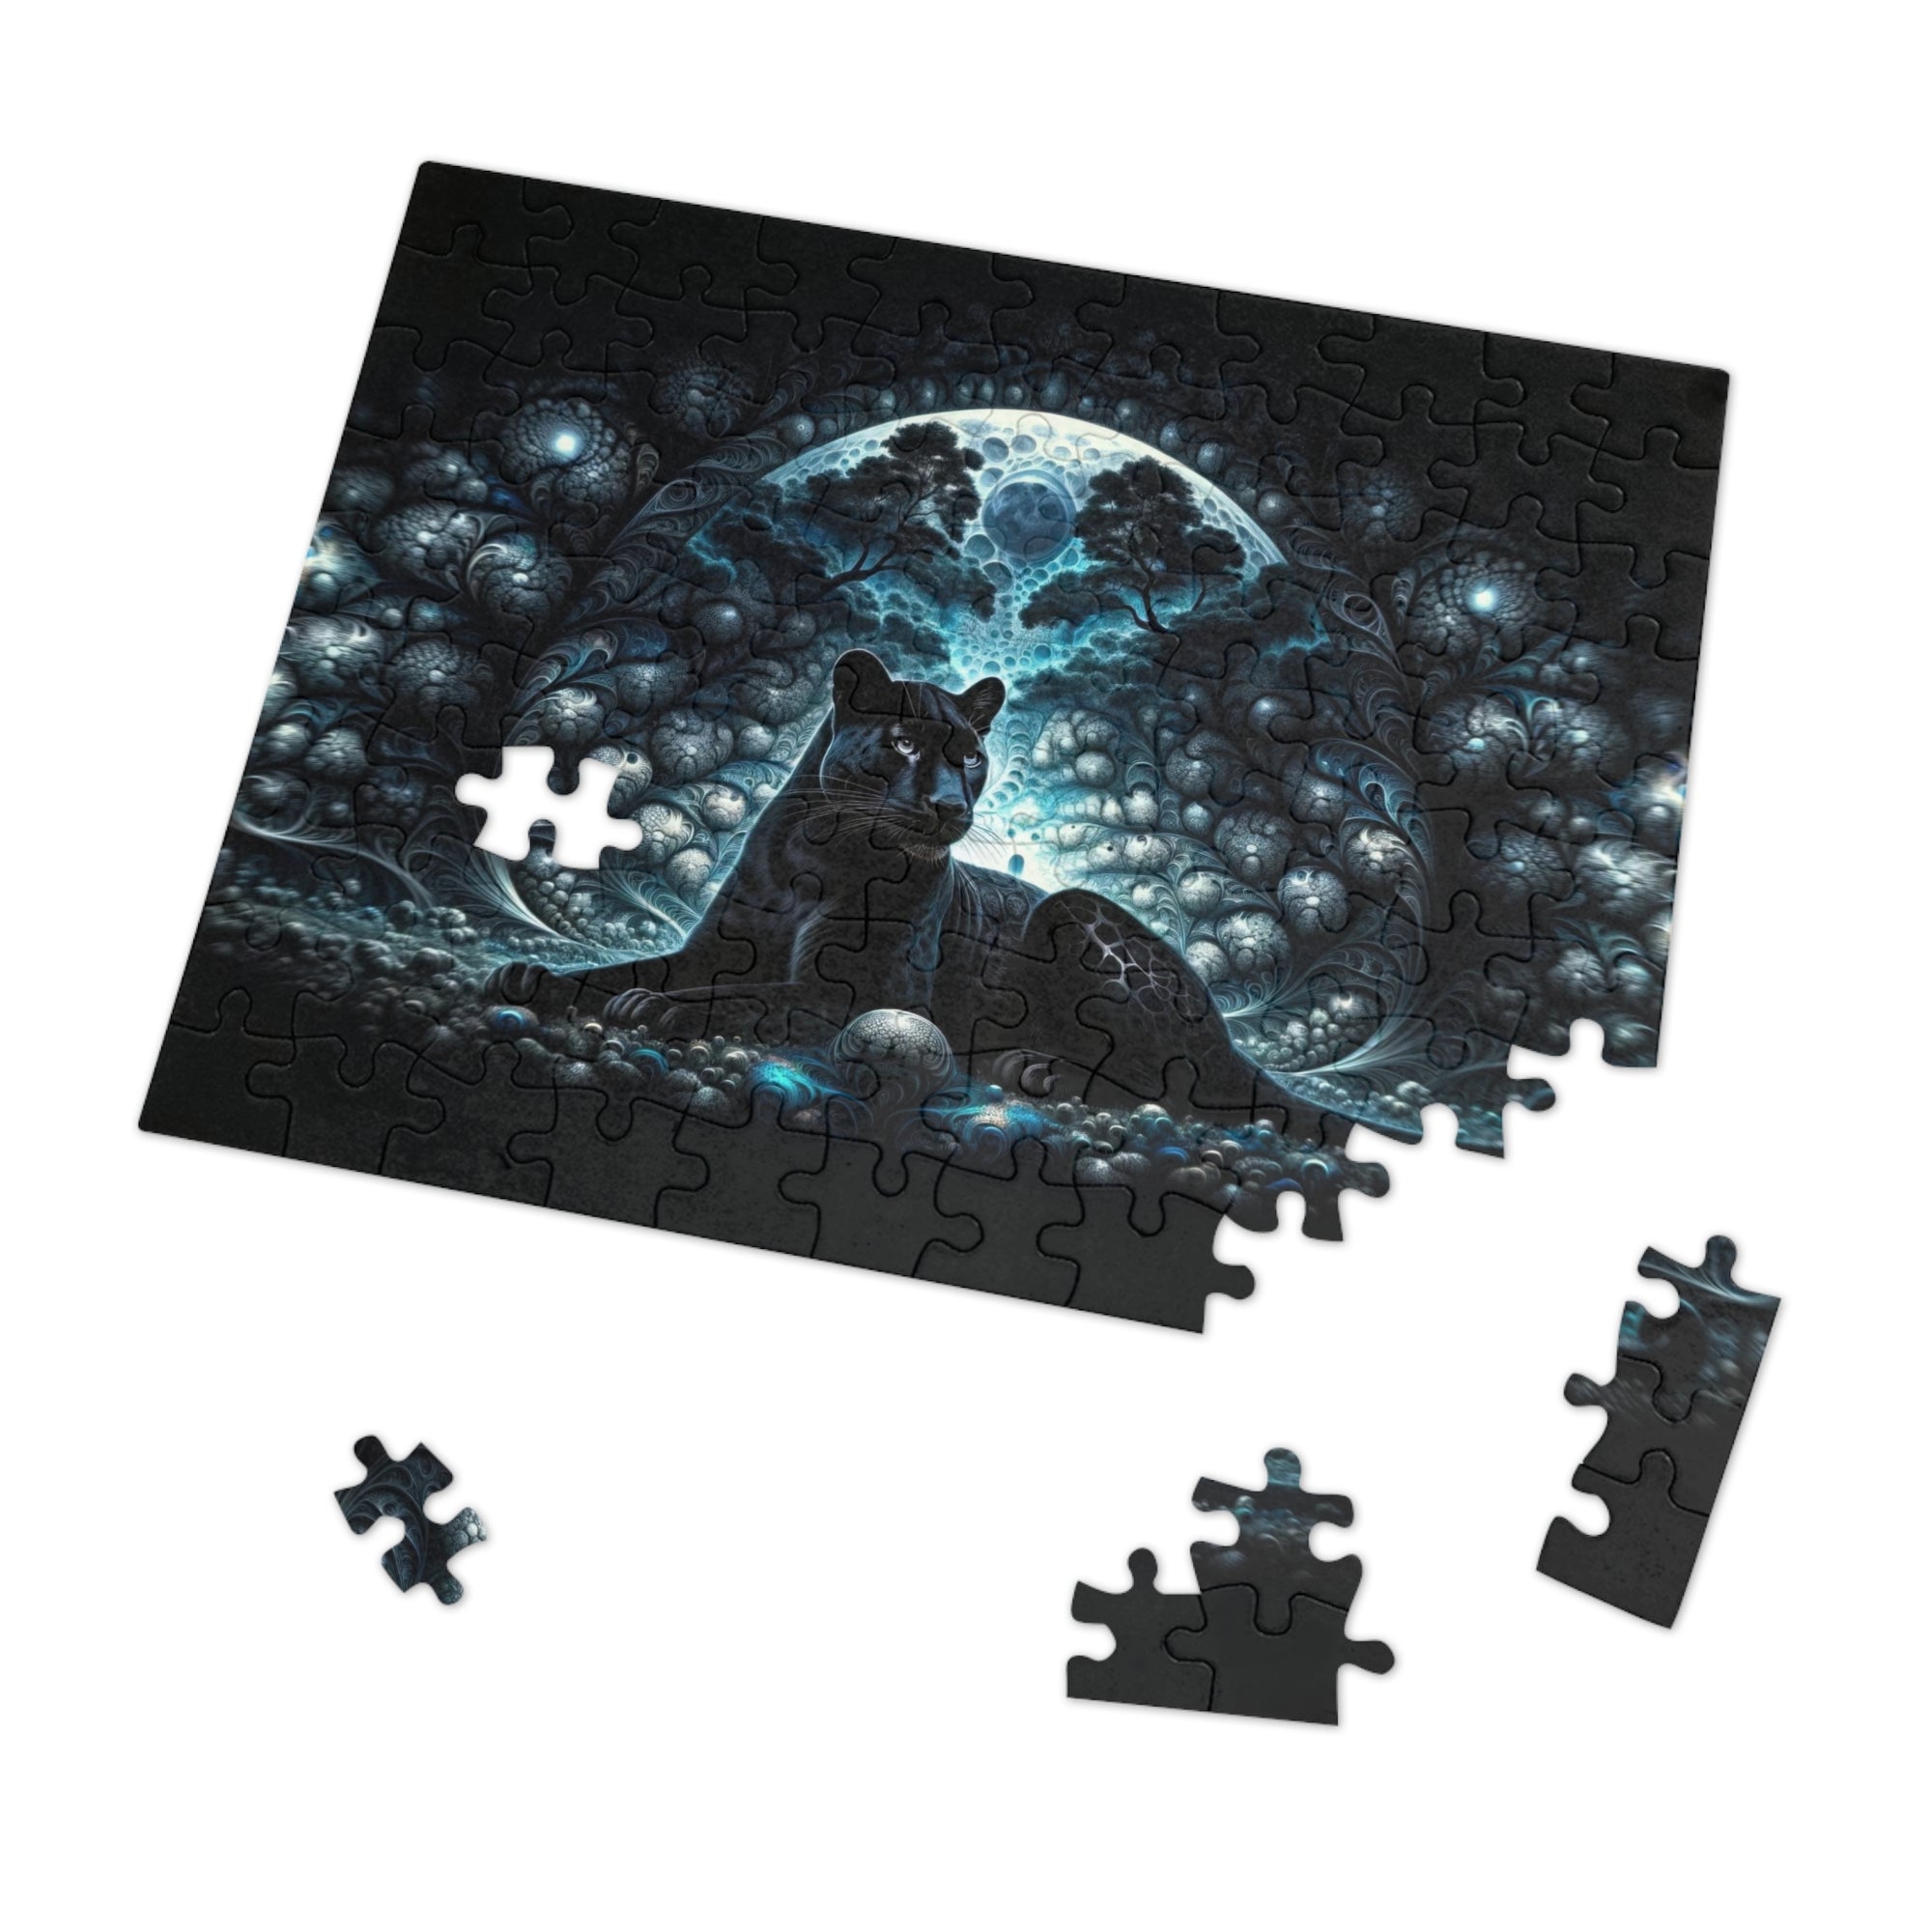 The Black Leopard’s Realm Puzzle